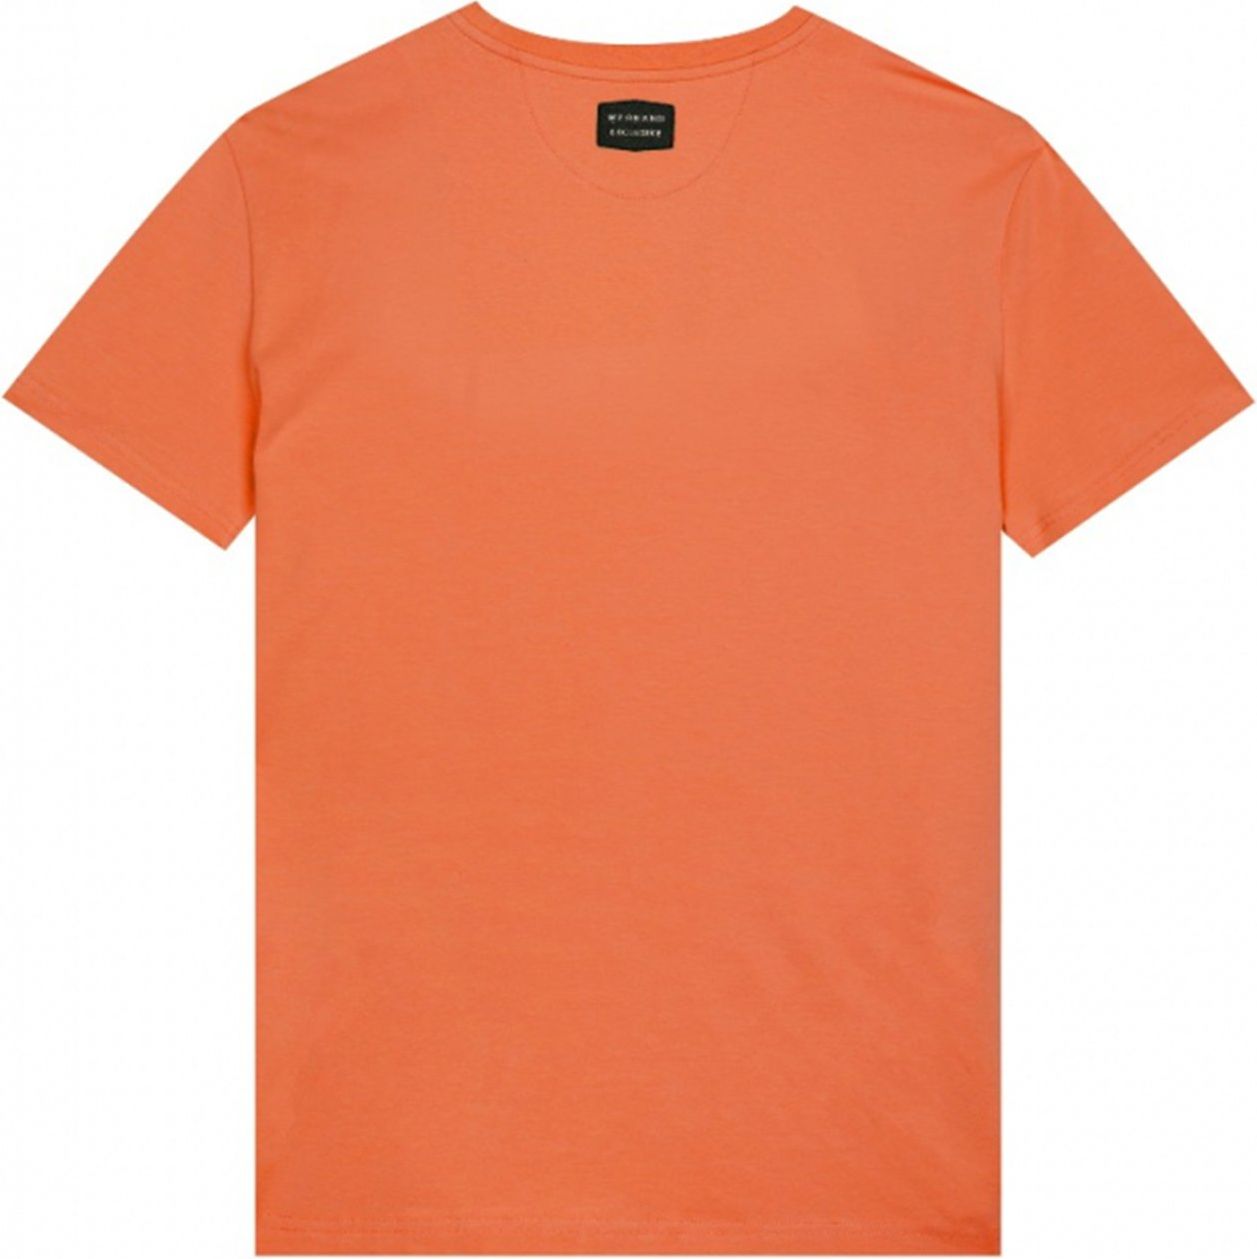 My Brand Varsity Basic Swim T-Shirt Salmon Roze